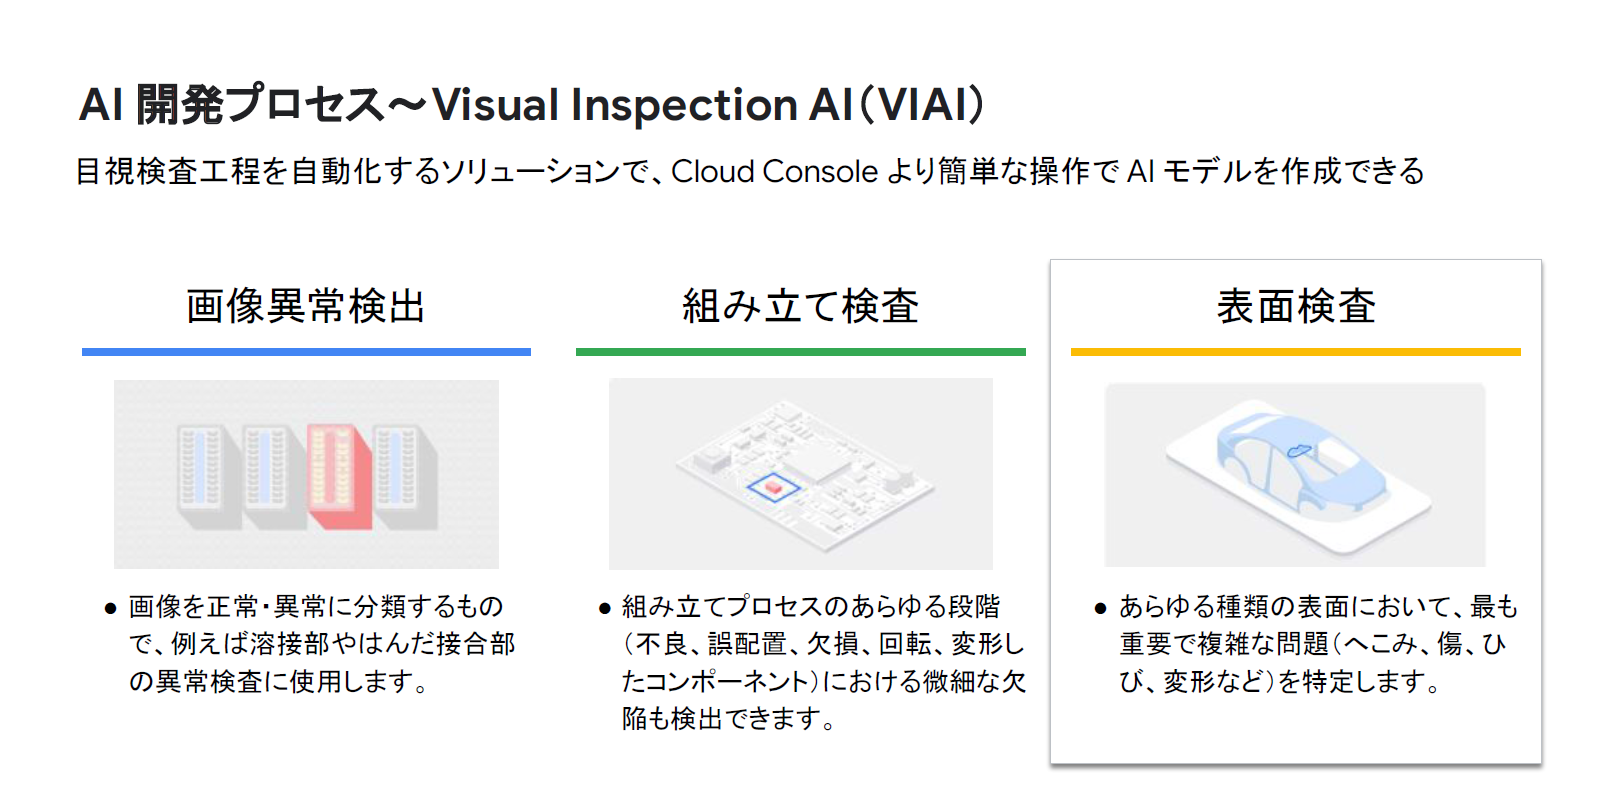 Visual Inspection AI の概要